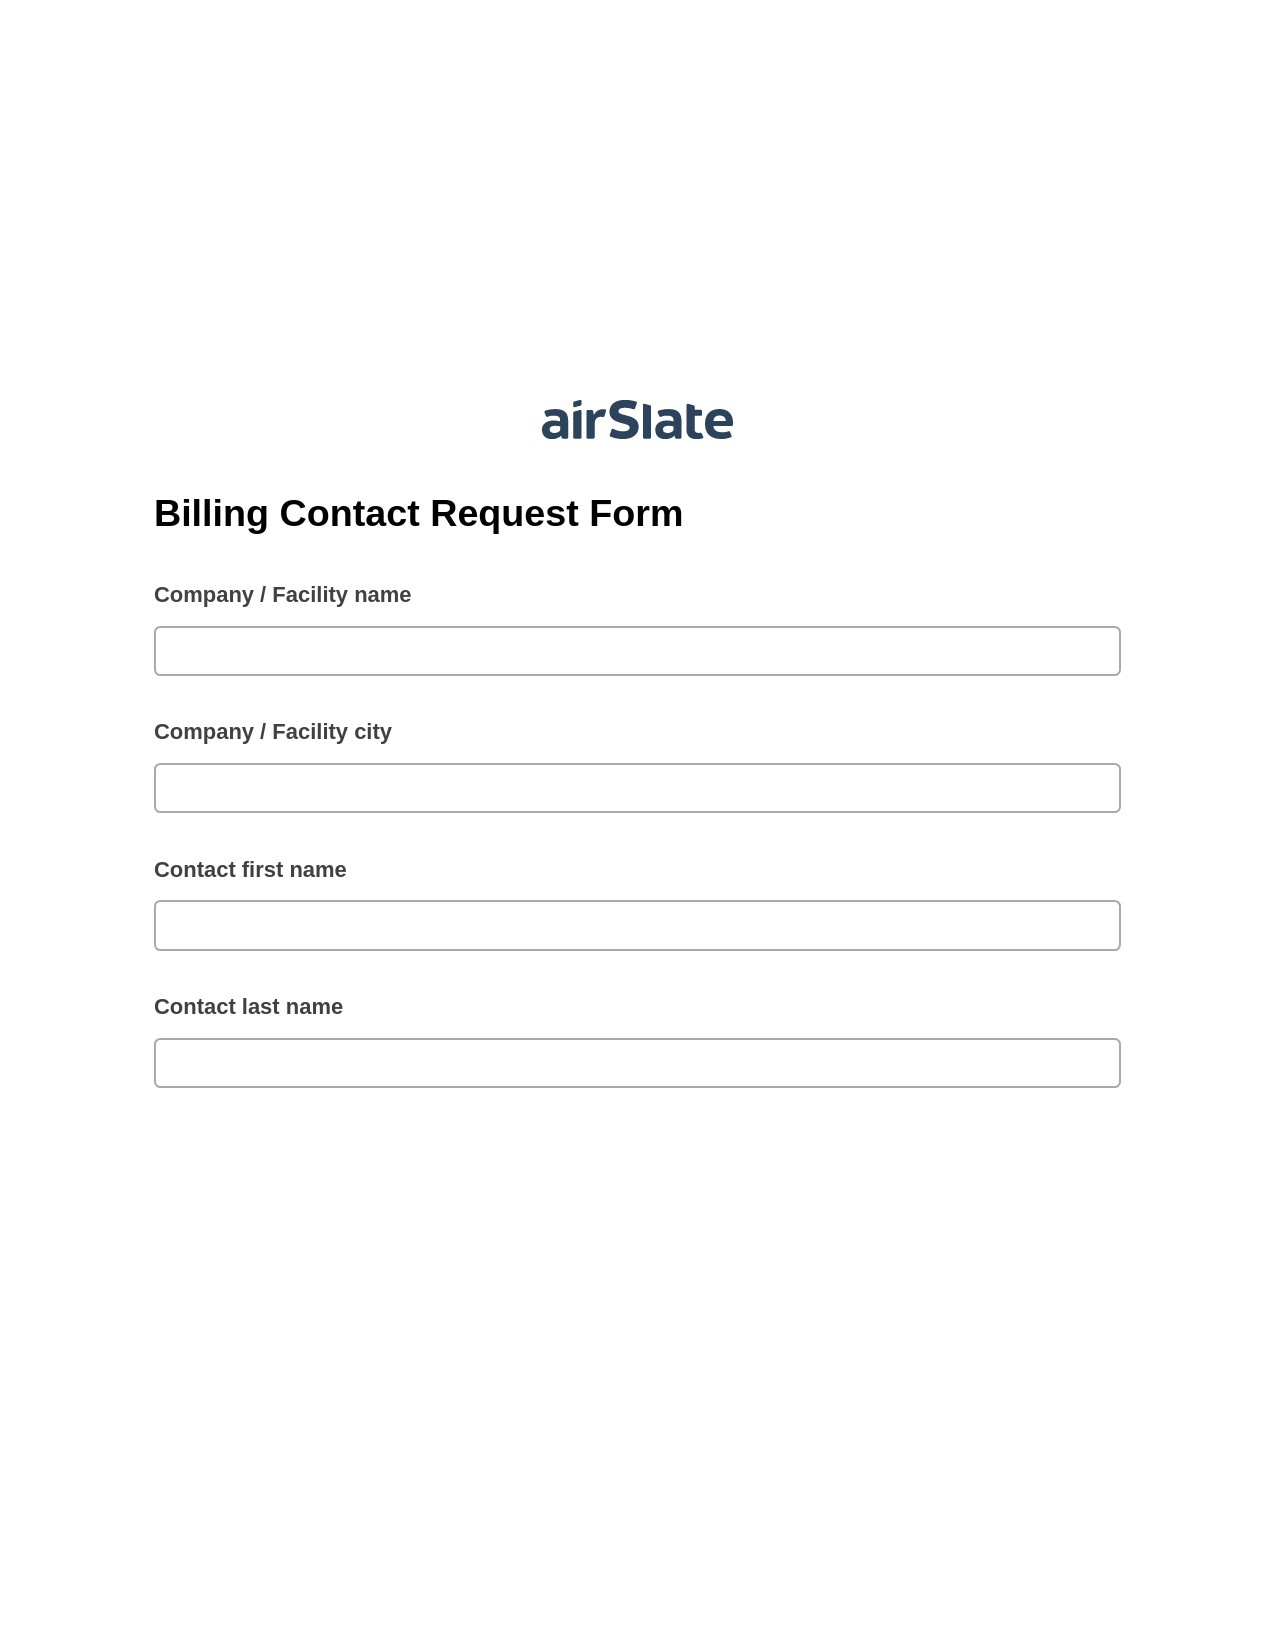 Multirole Billing Contact Request Form Pre-fill Document Bot, Google Calendar Bot, Slack Notification Postfinish Bot